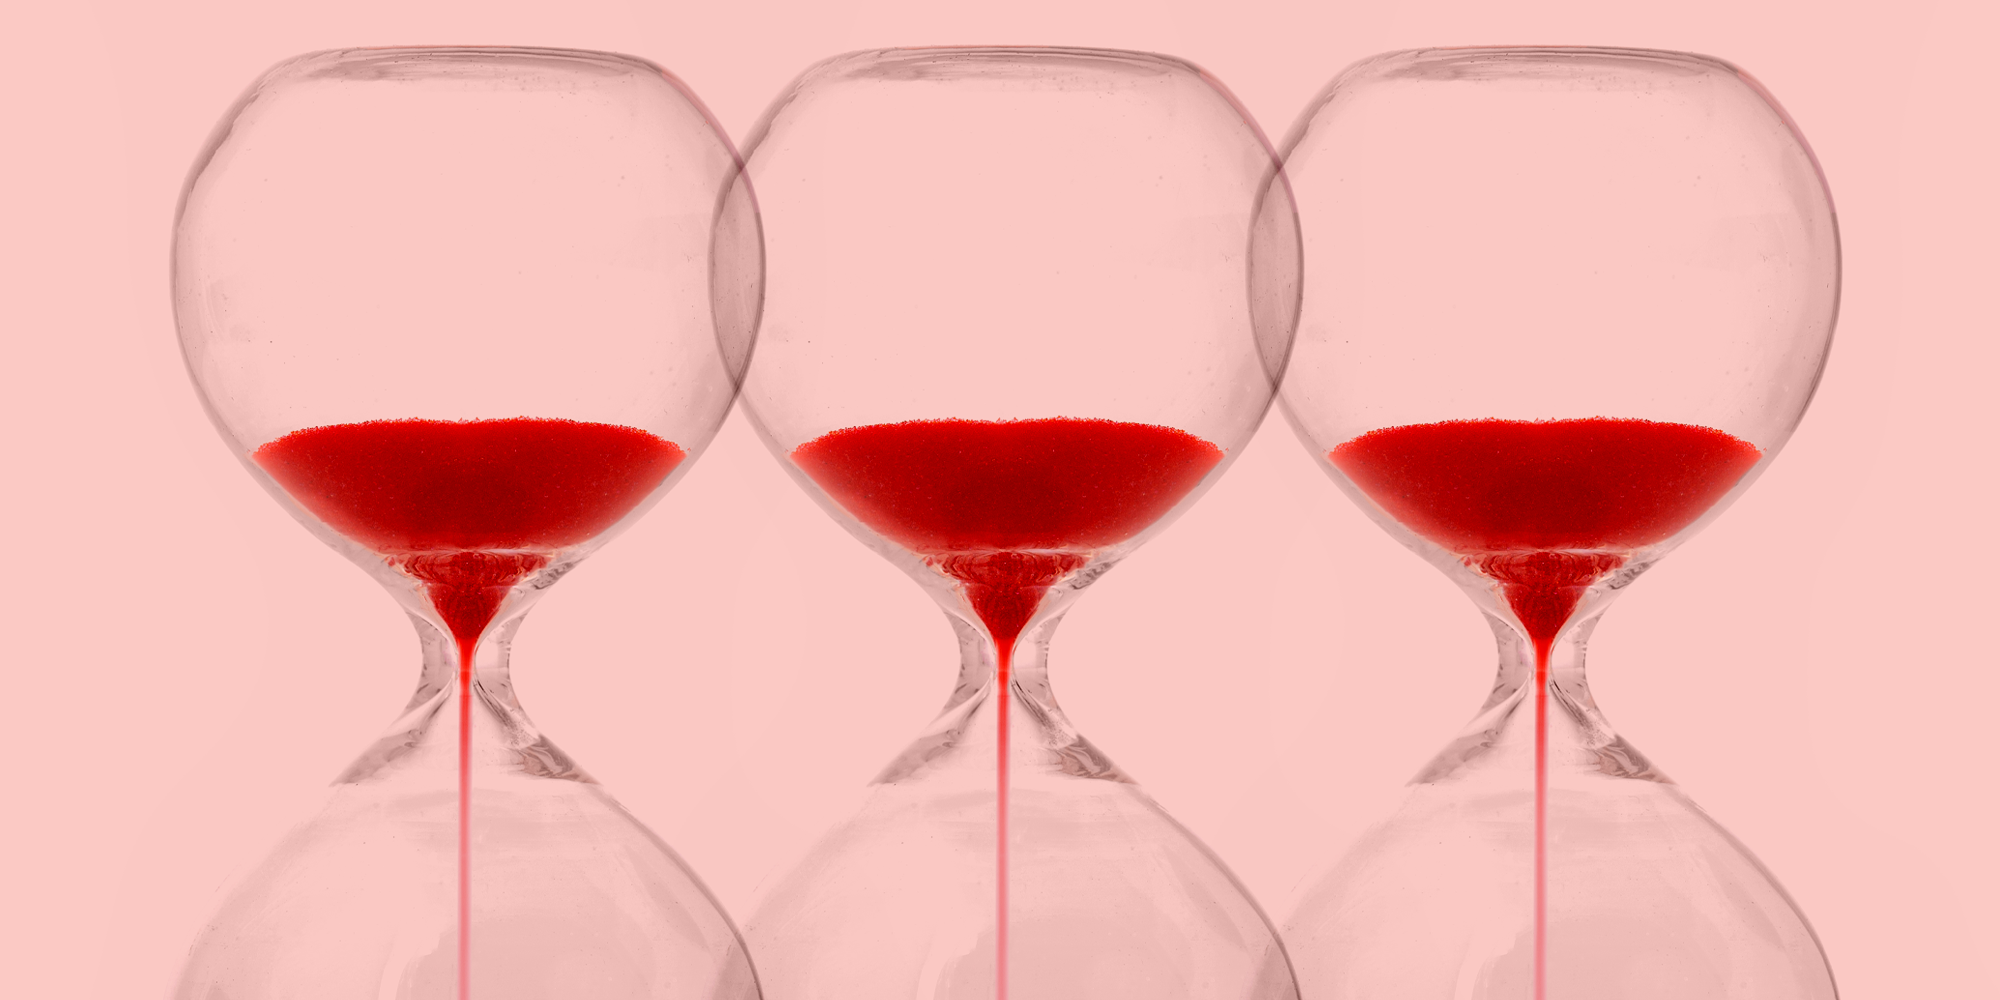 Transfusion cocktails shape the kind of memories that make life more joyful